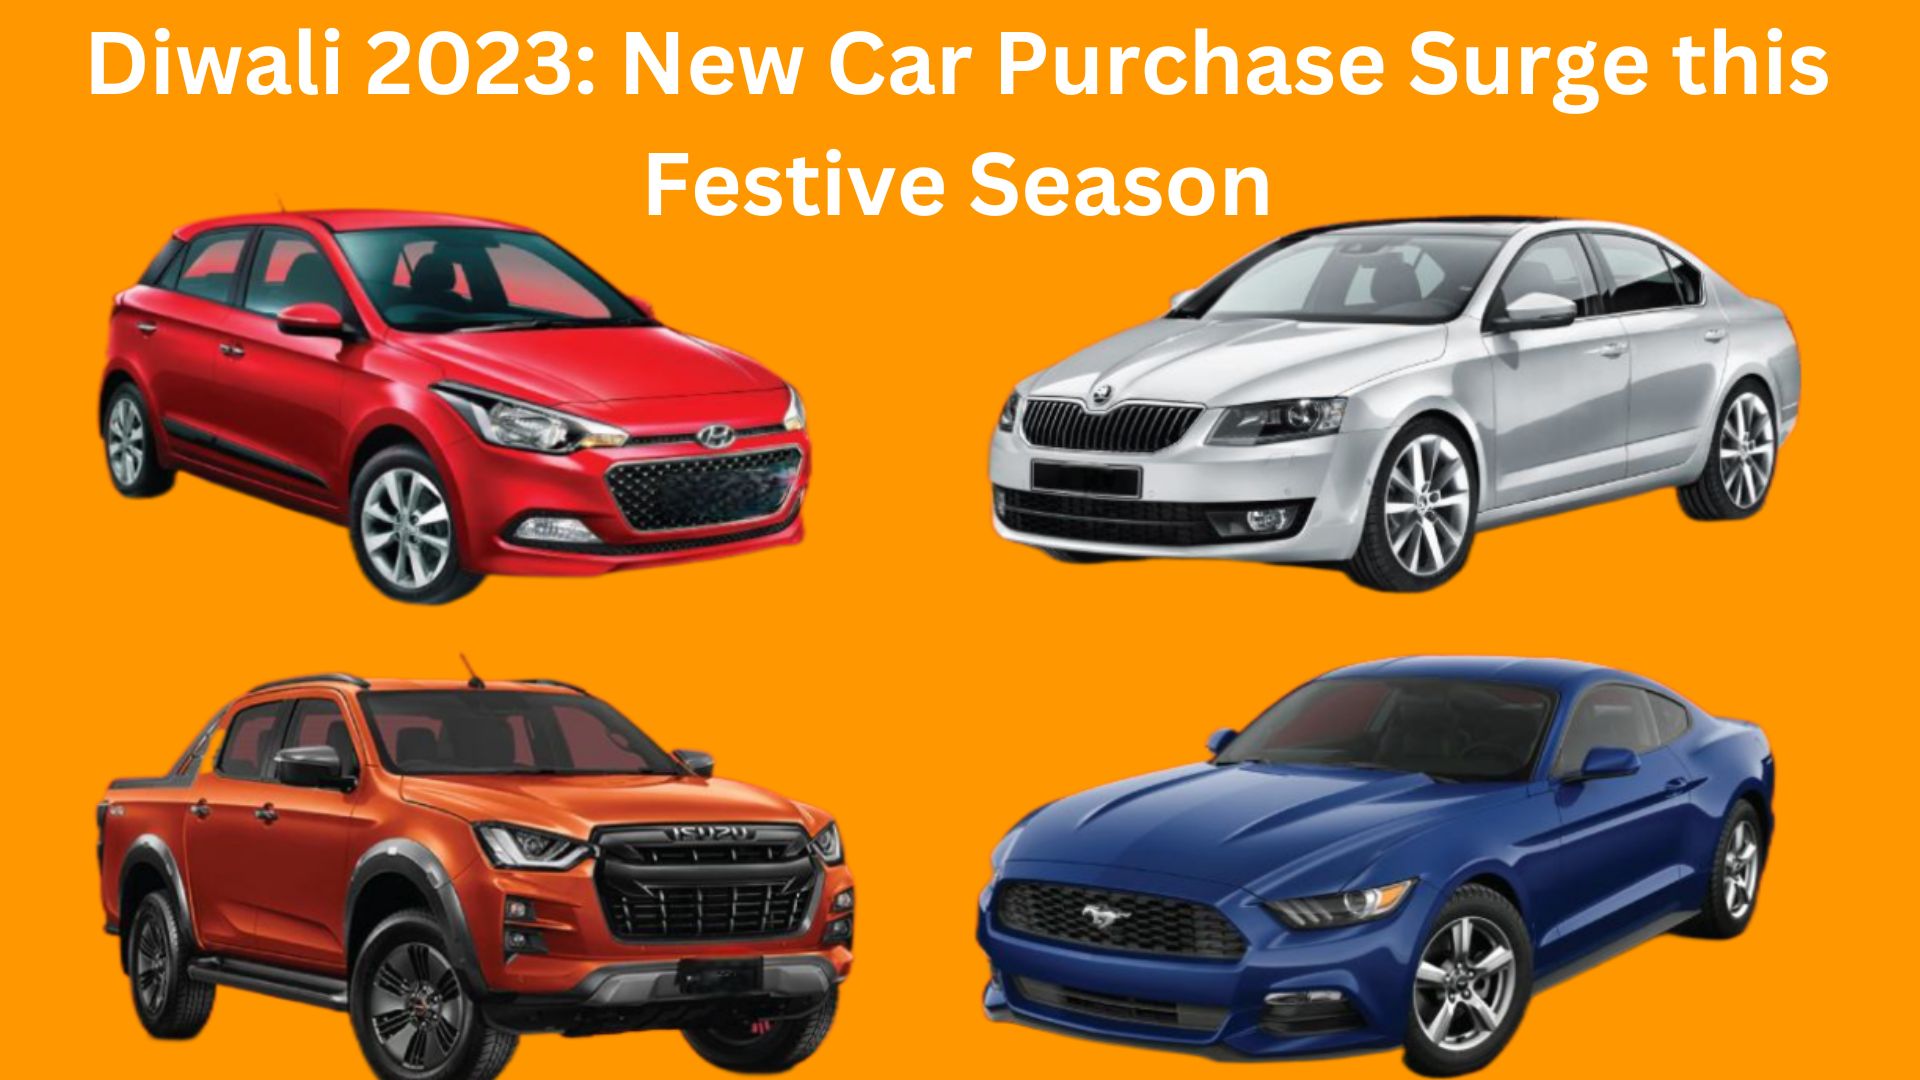 New Car Purchase Increased in Diwali 2023